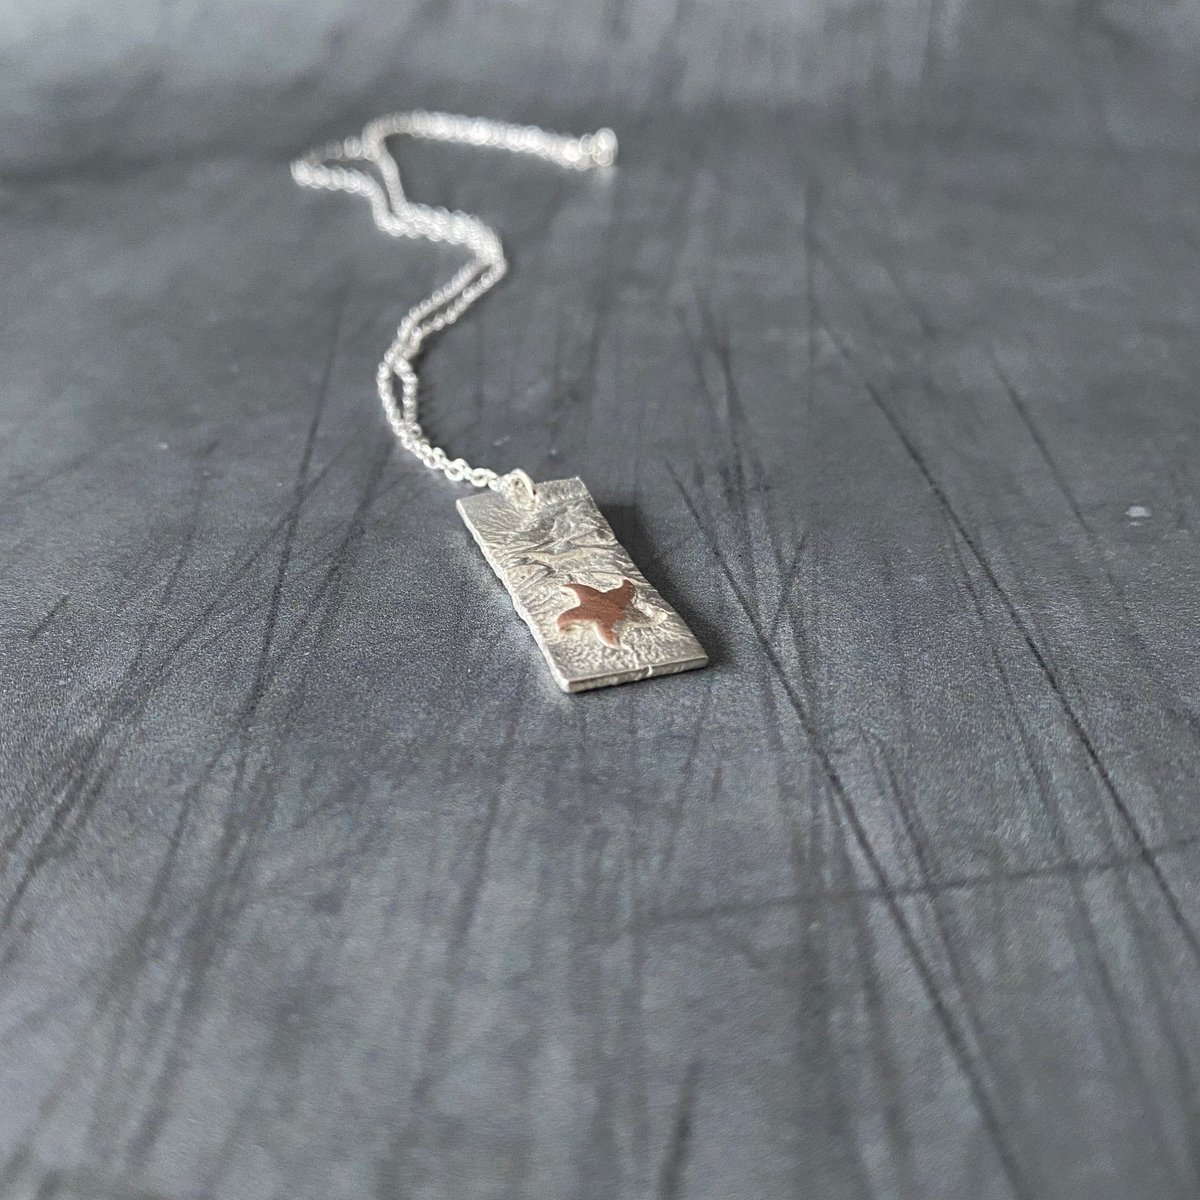 Small Rectangle Pendant with Copper Star tuppu.net/55d39065 #shopsmall #HandmadeHour #inbizhour #bizbubble #giftideas #UKHashtags #MHHSBD ##UKGiftHour #Star